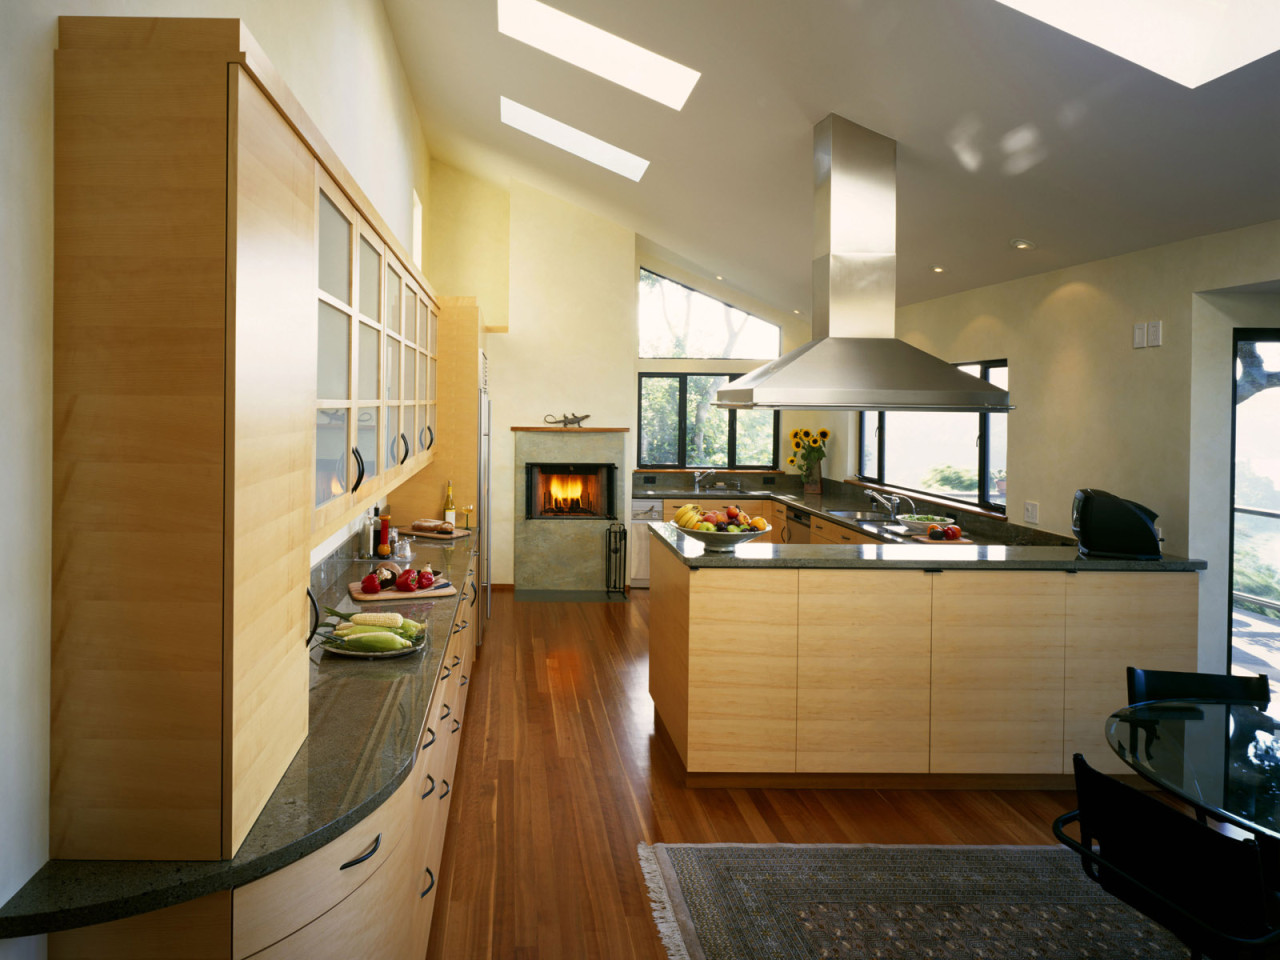 Previous, Interior - Modern kitchen design wallpaper